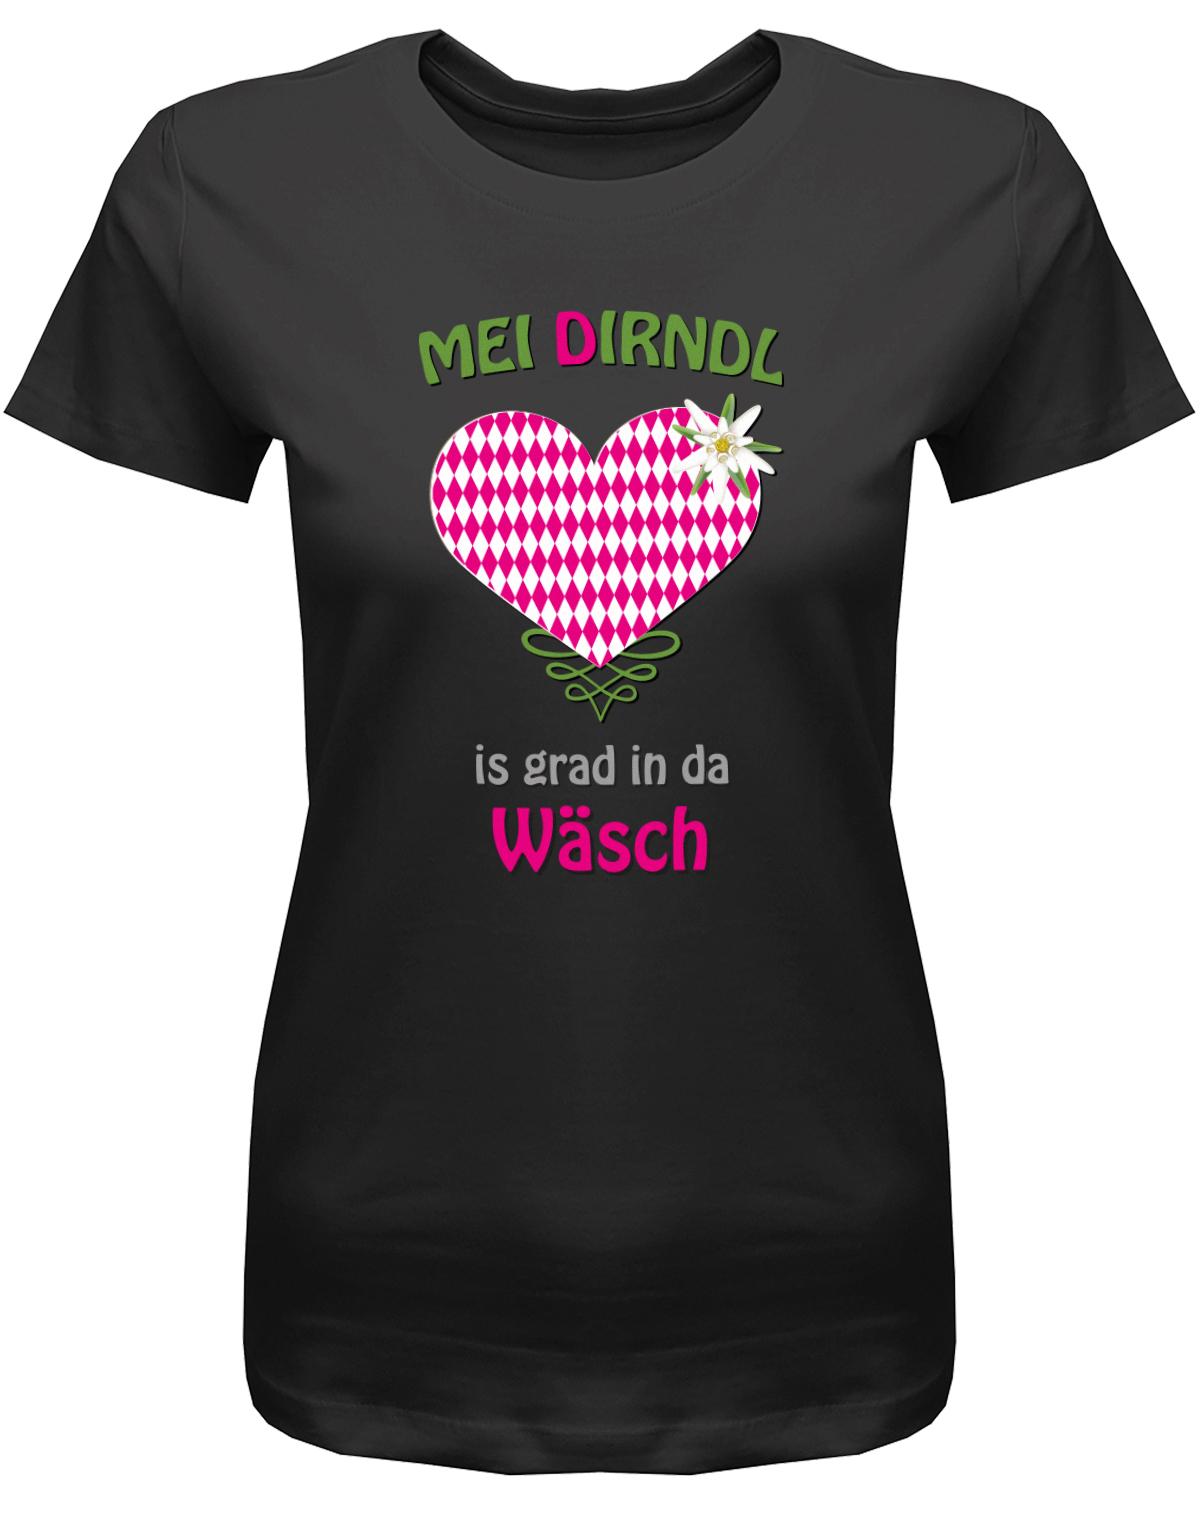 Mei-Dirndl-is-grad-in-da-w-sch-damen-shirt-schwarz